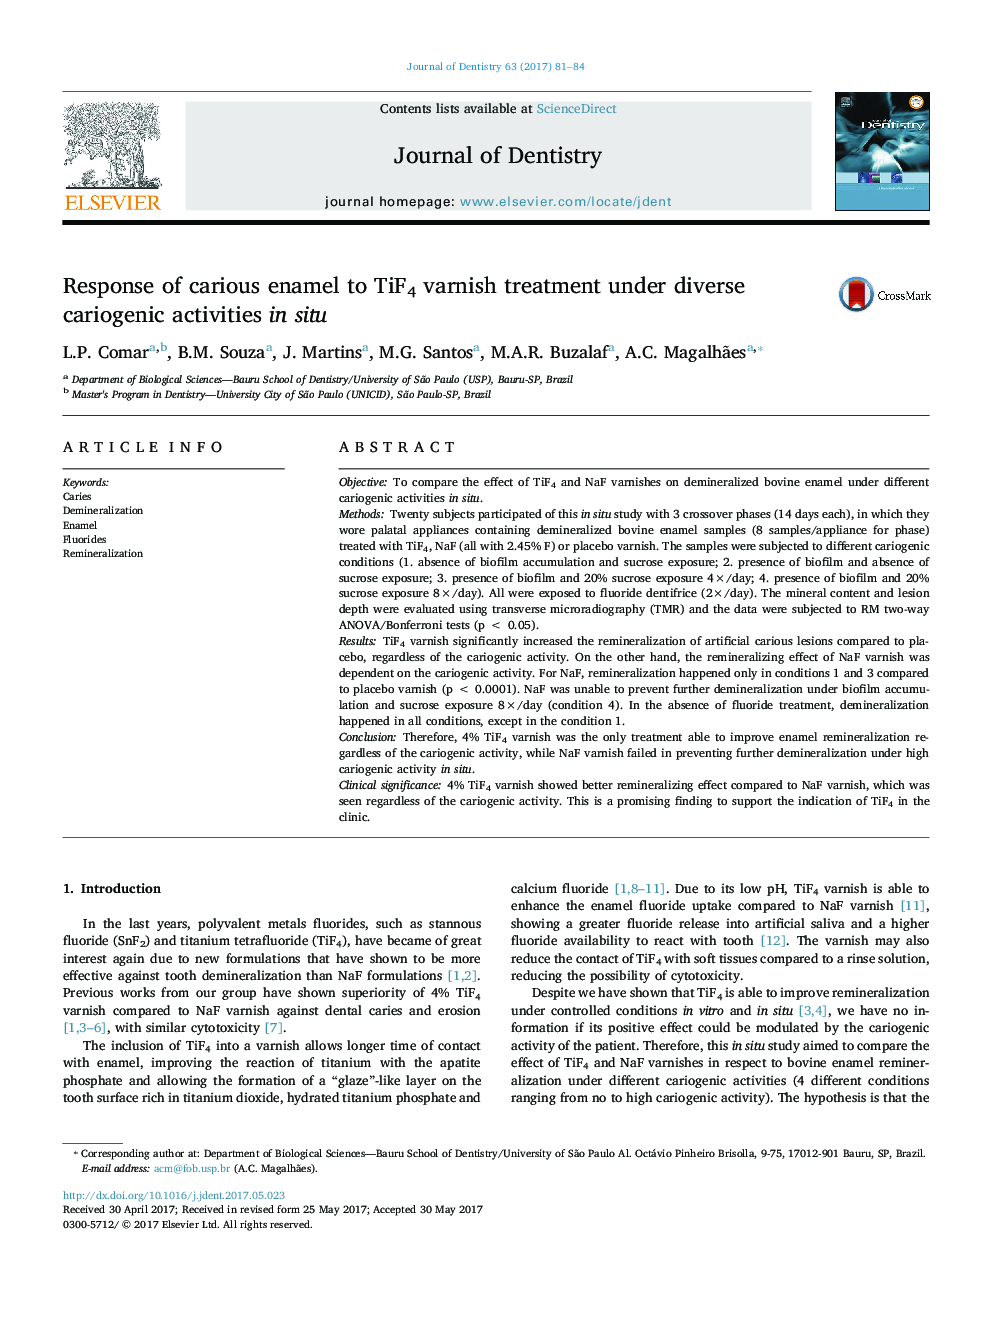 Response of carious enamel to TiF4 varnish treatment under diverse cariogenic activities in situ